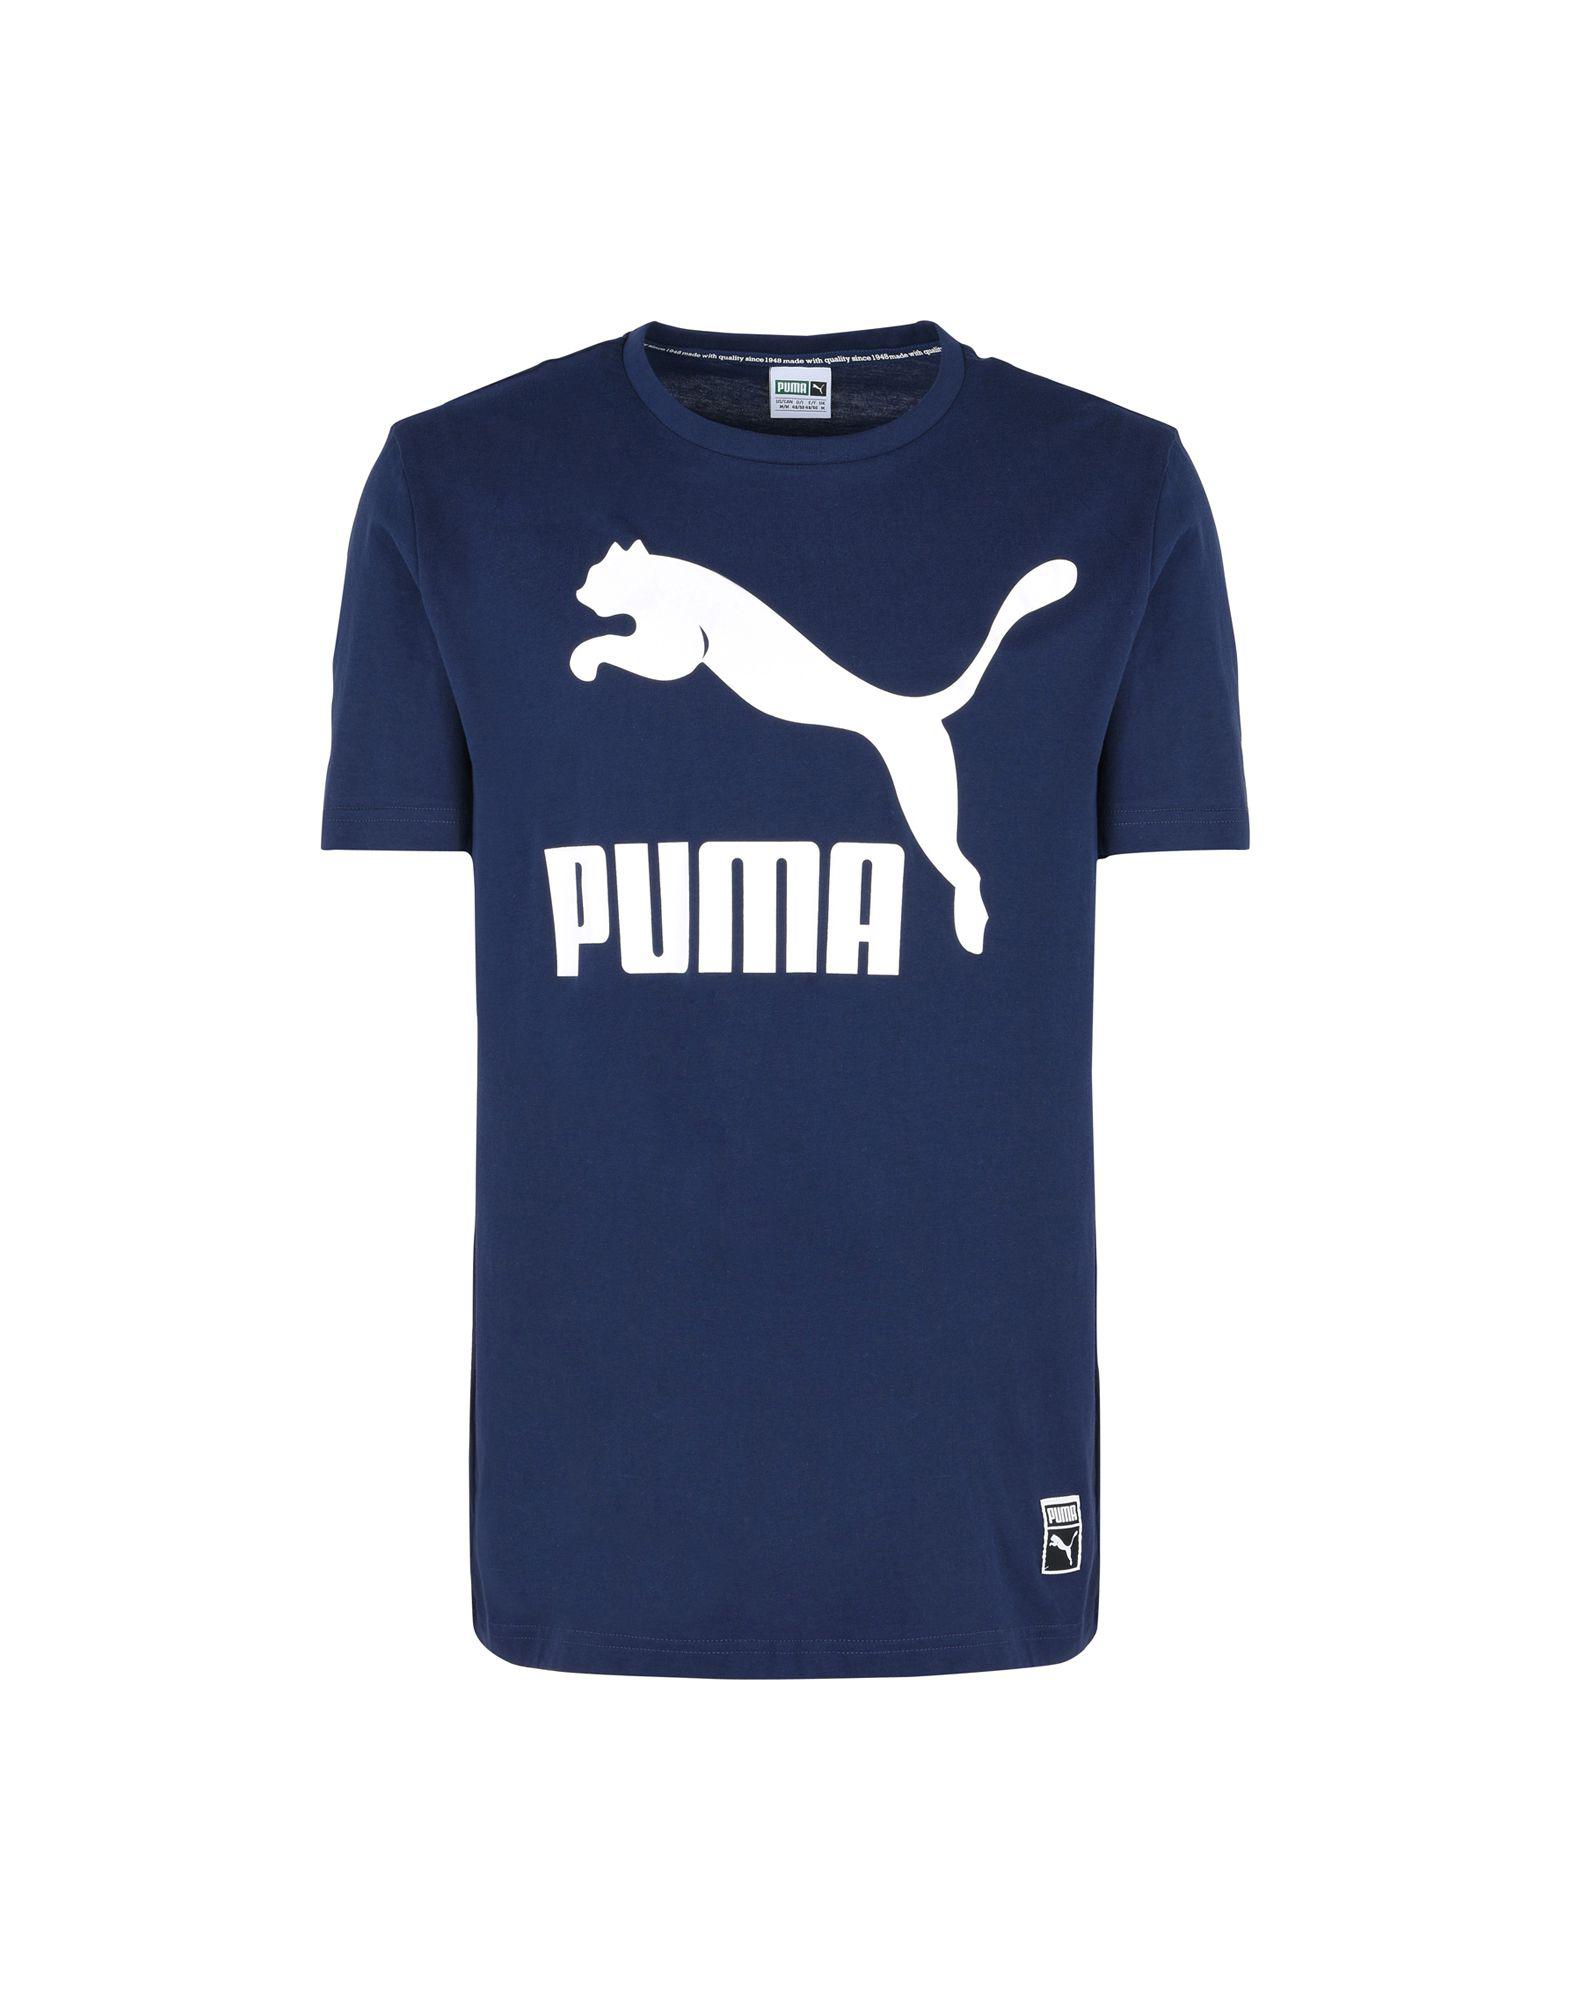 PUMA Cotton T-shirt in Dark Blue (Blue 